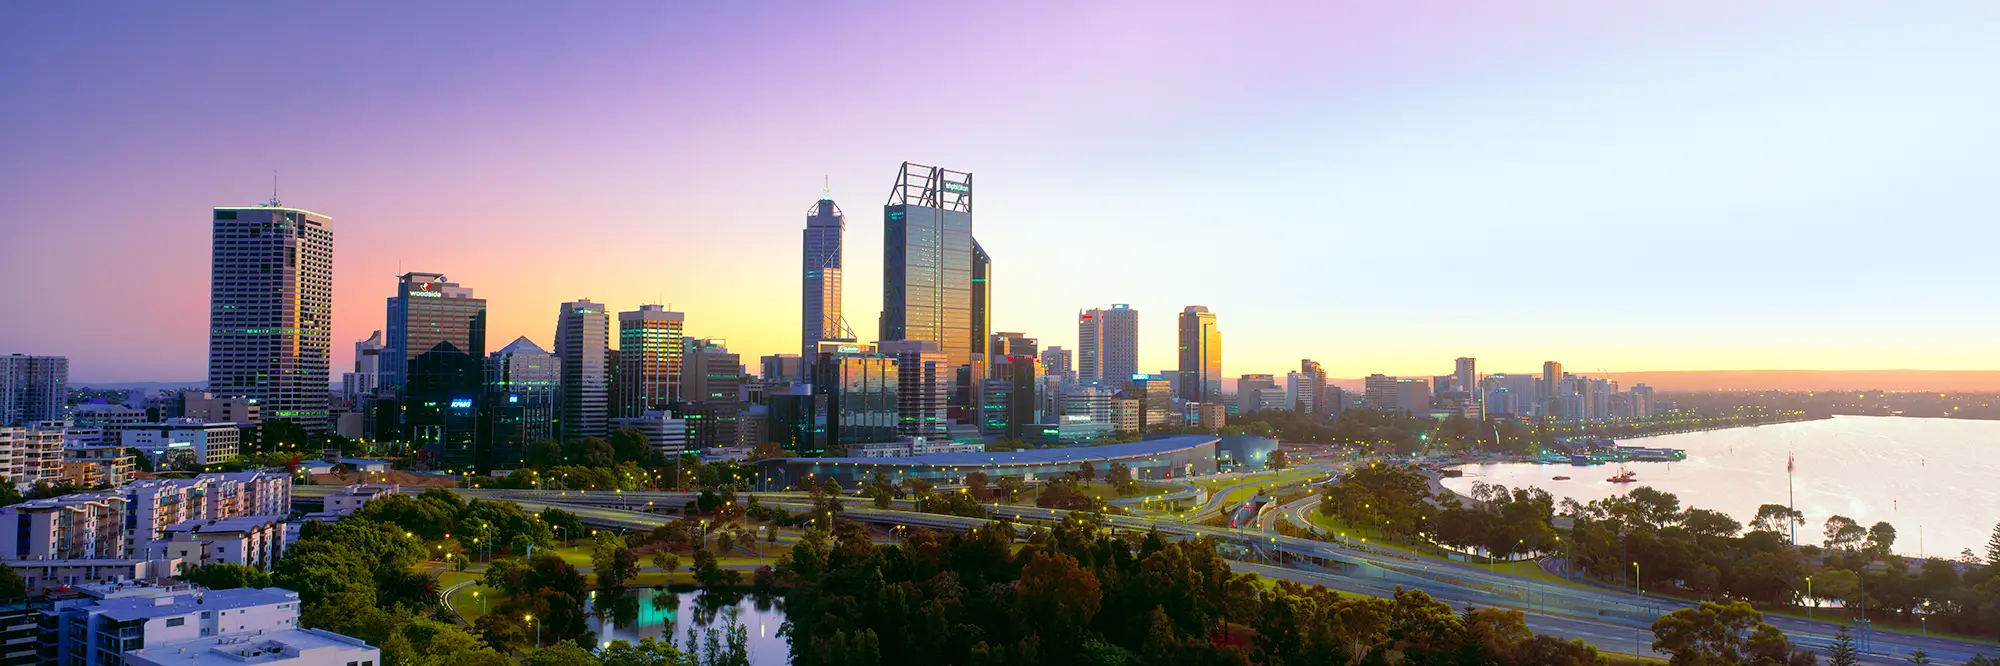 Perth City Sunrise Panoramic Image